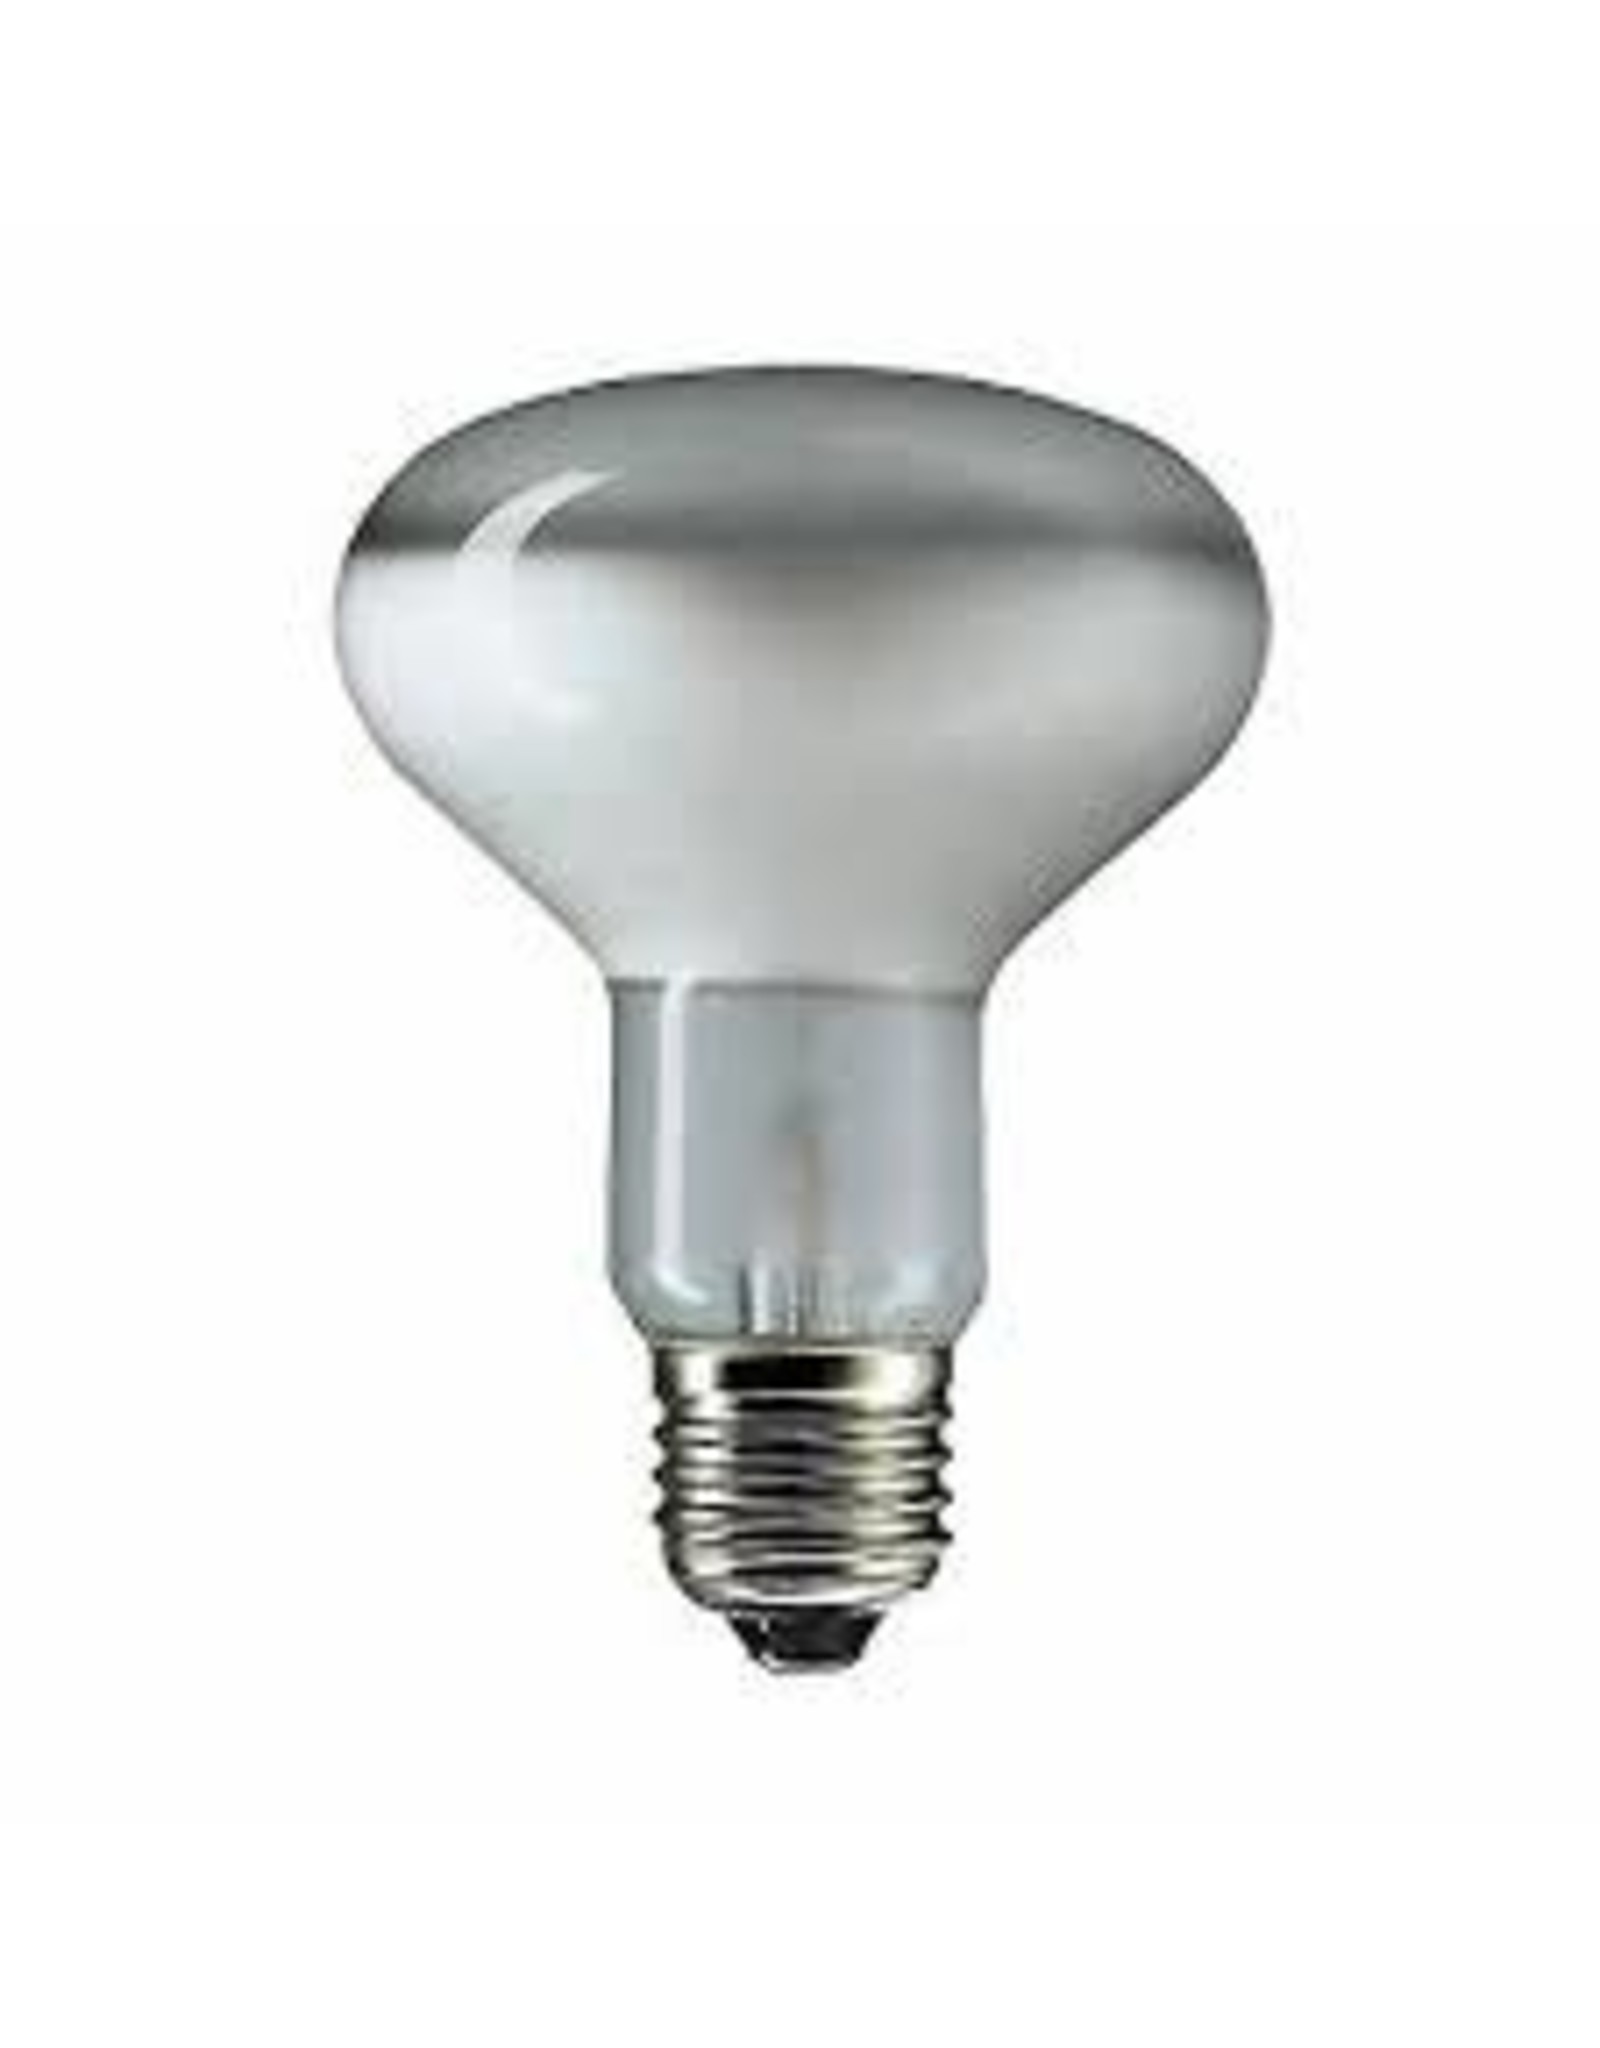 Lava Lamp Replacement 100W Light Bulb